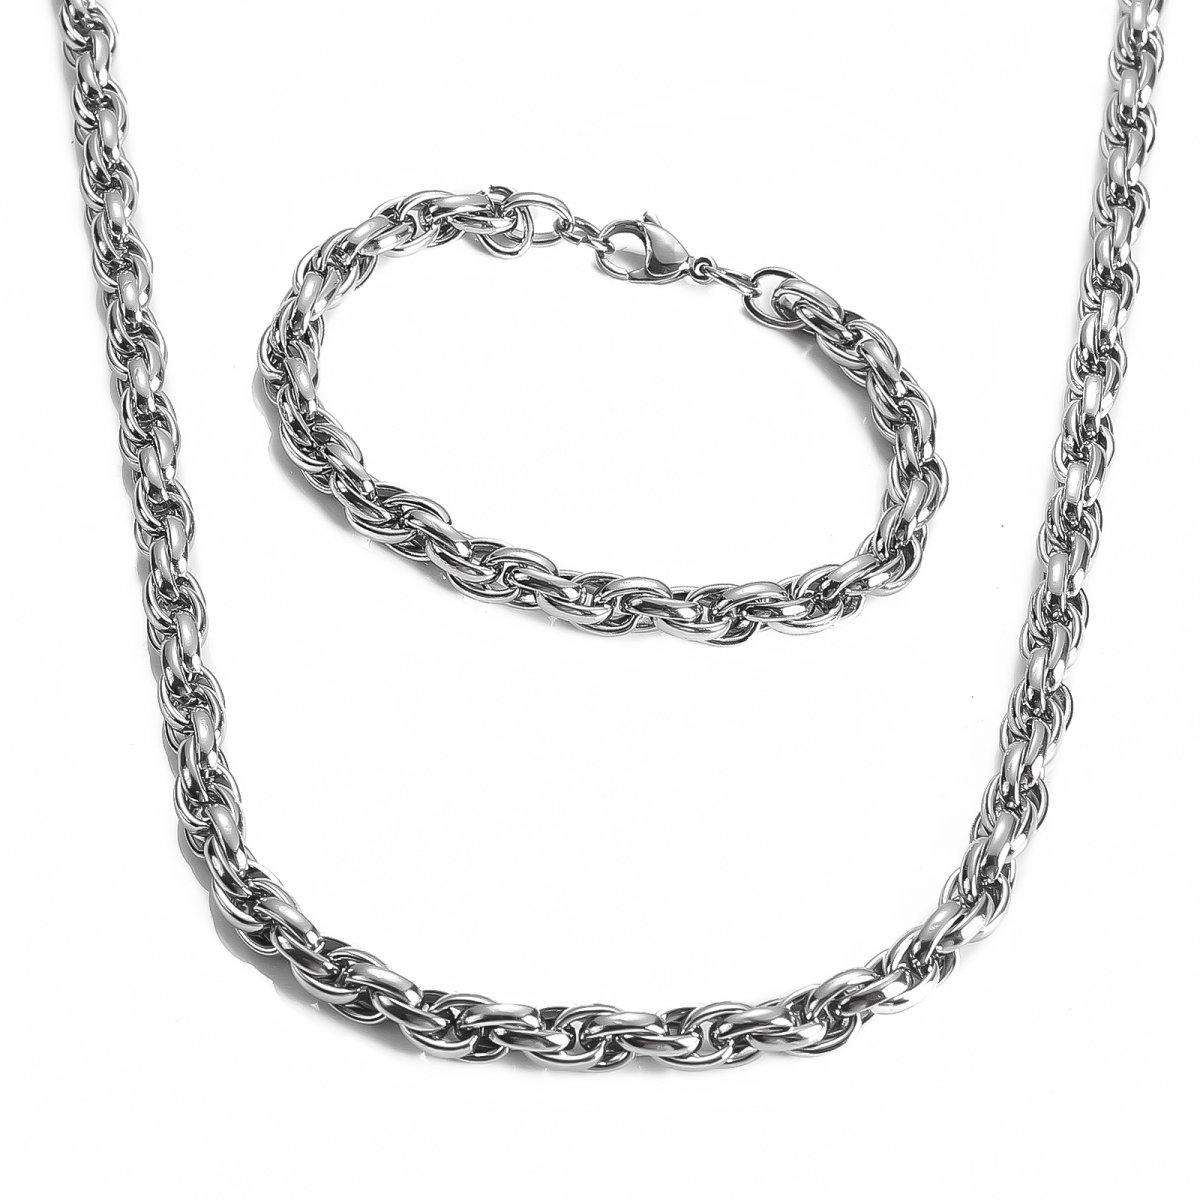 King Chain Bracelet US$1/PC-NORSECOLLECTION- Viking Jewelry,Viking Necklace,Viking Bracelet,Viking Rings,Viking Mugs,Viking Accessories,Viking Crafts